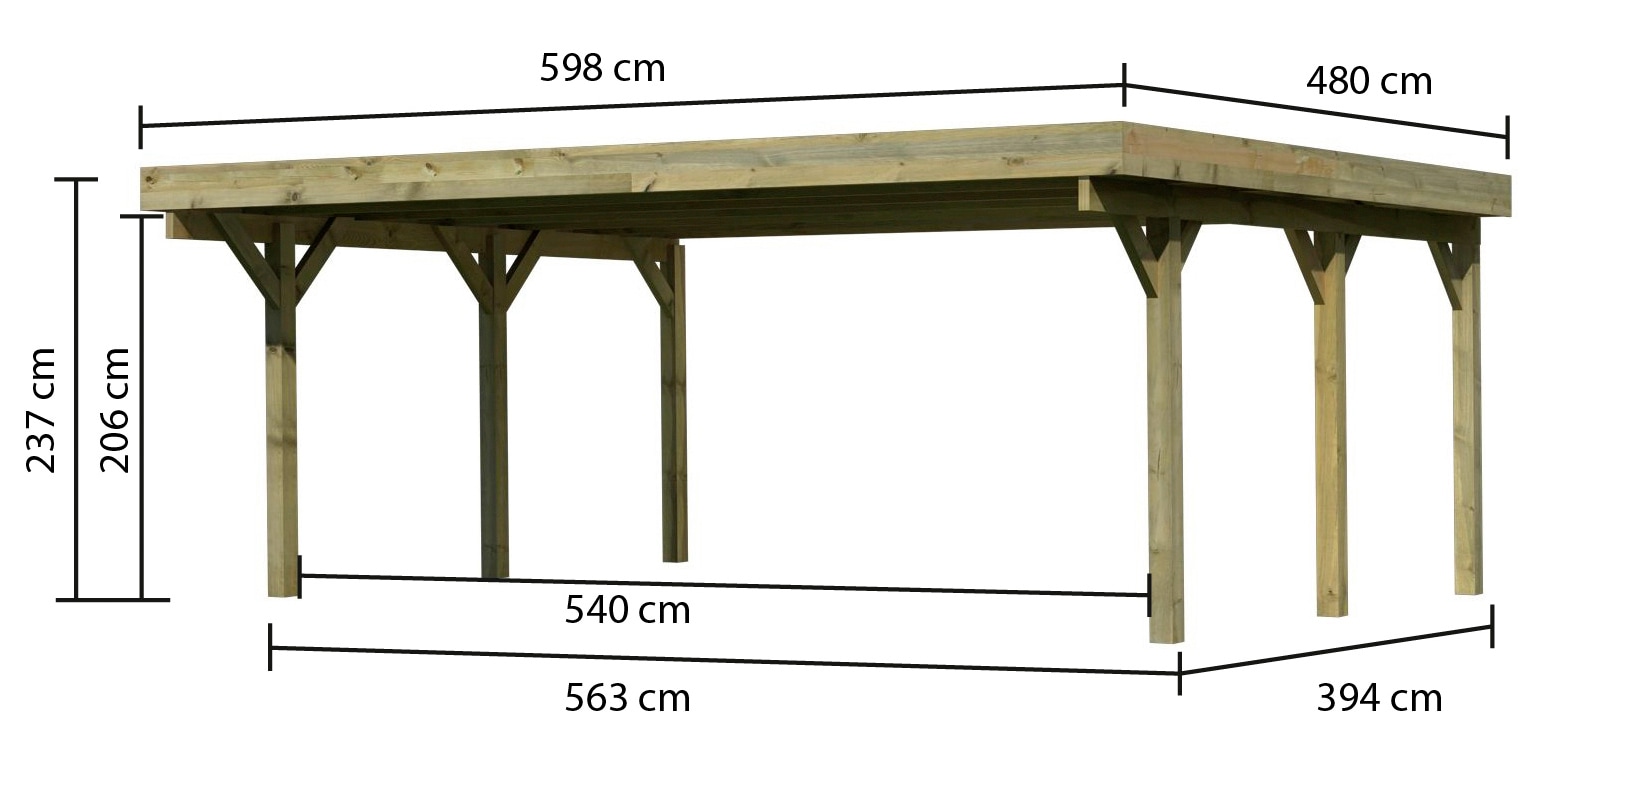 Karibu Doppelcarport »Classic 1«, Holz, 540 cm, braun